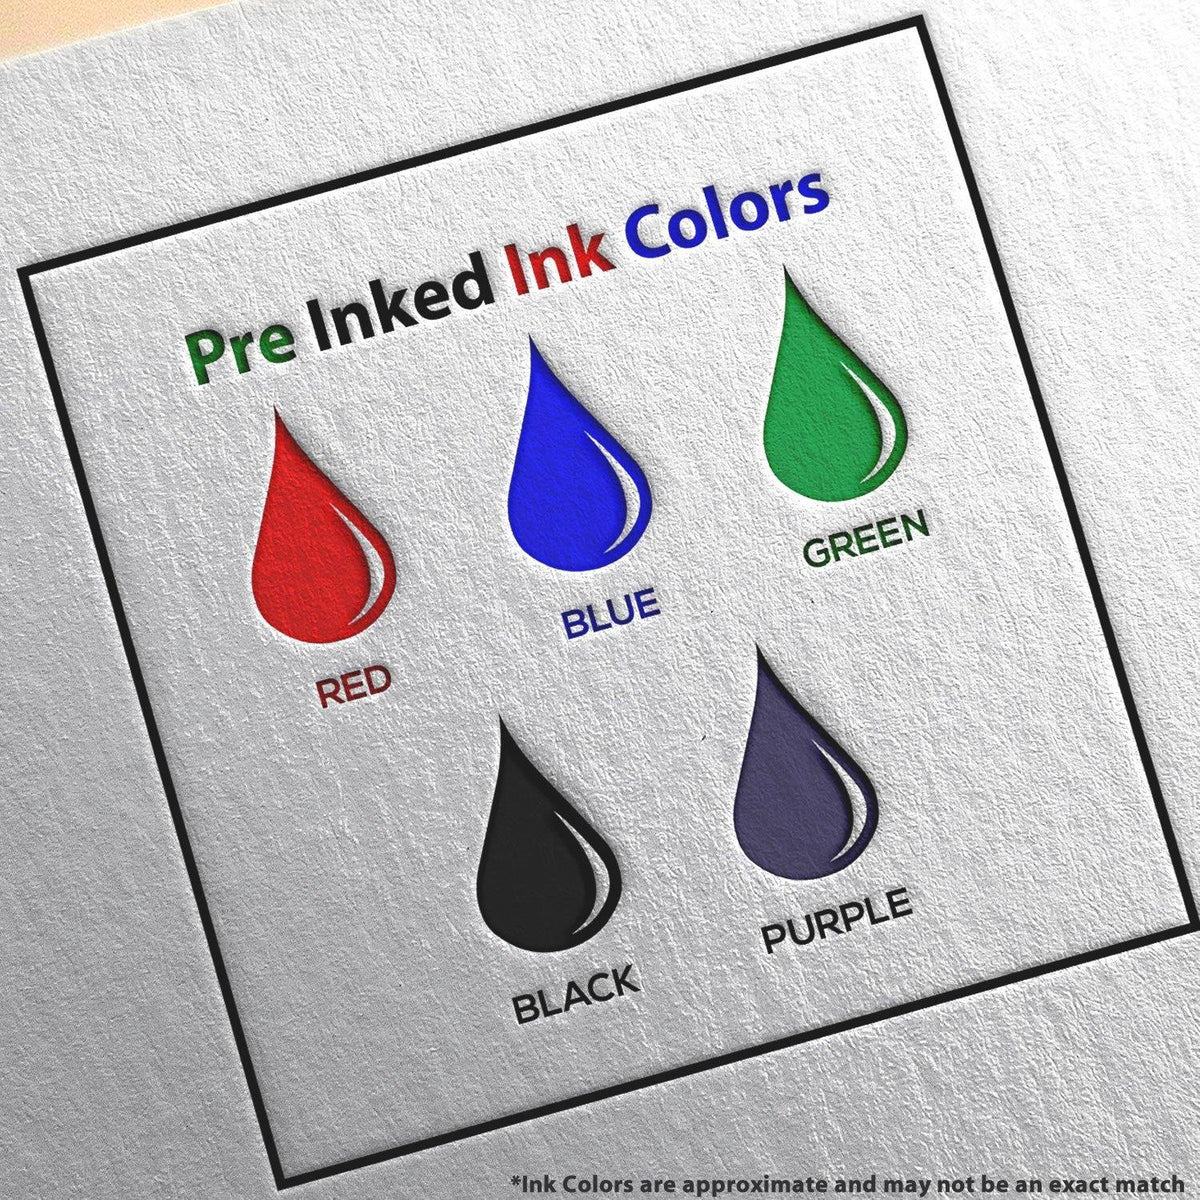 Slim Pre Inked Fax It 2 Stamp Ink Color Options